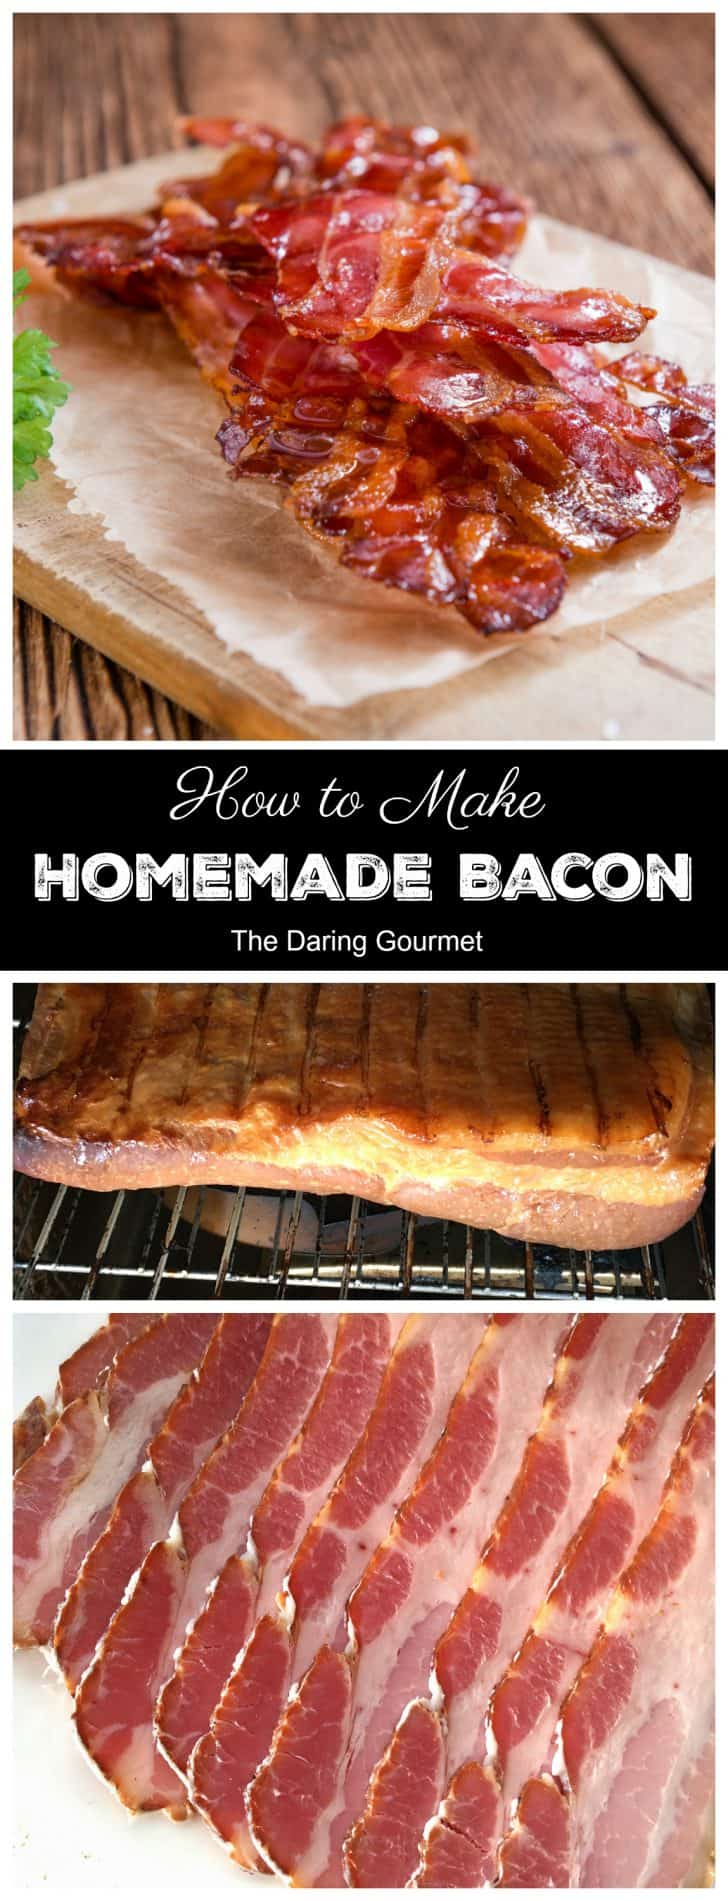 homemade bacon diy recipe how to make